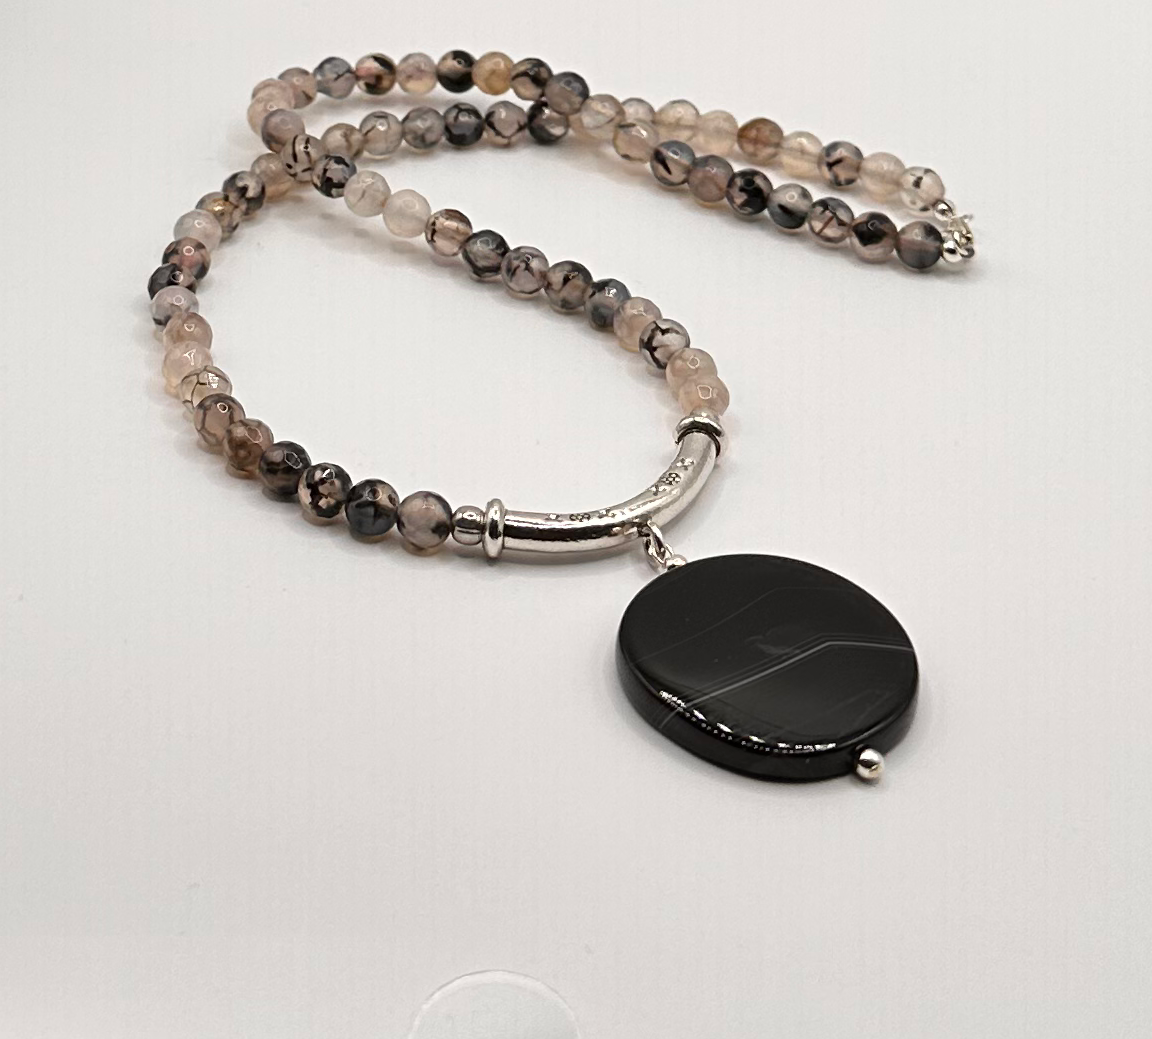 Multi Color Agate Bead Necklace with Black Jasper Stone Pendant.